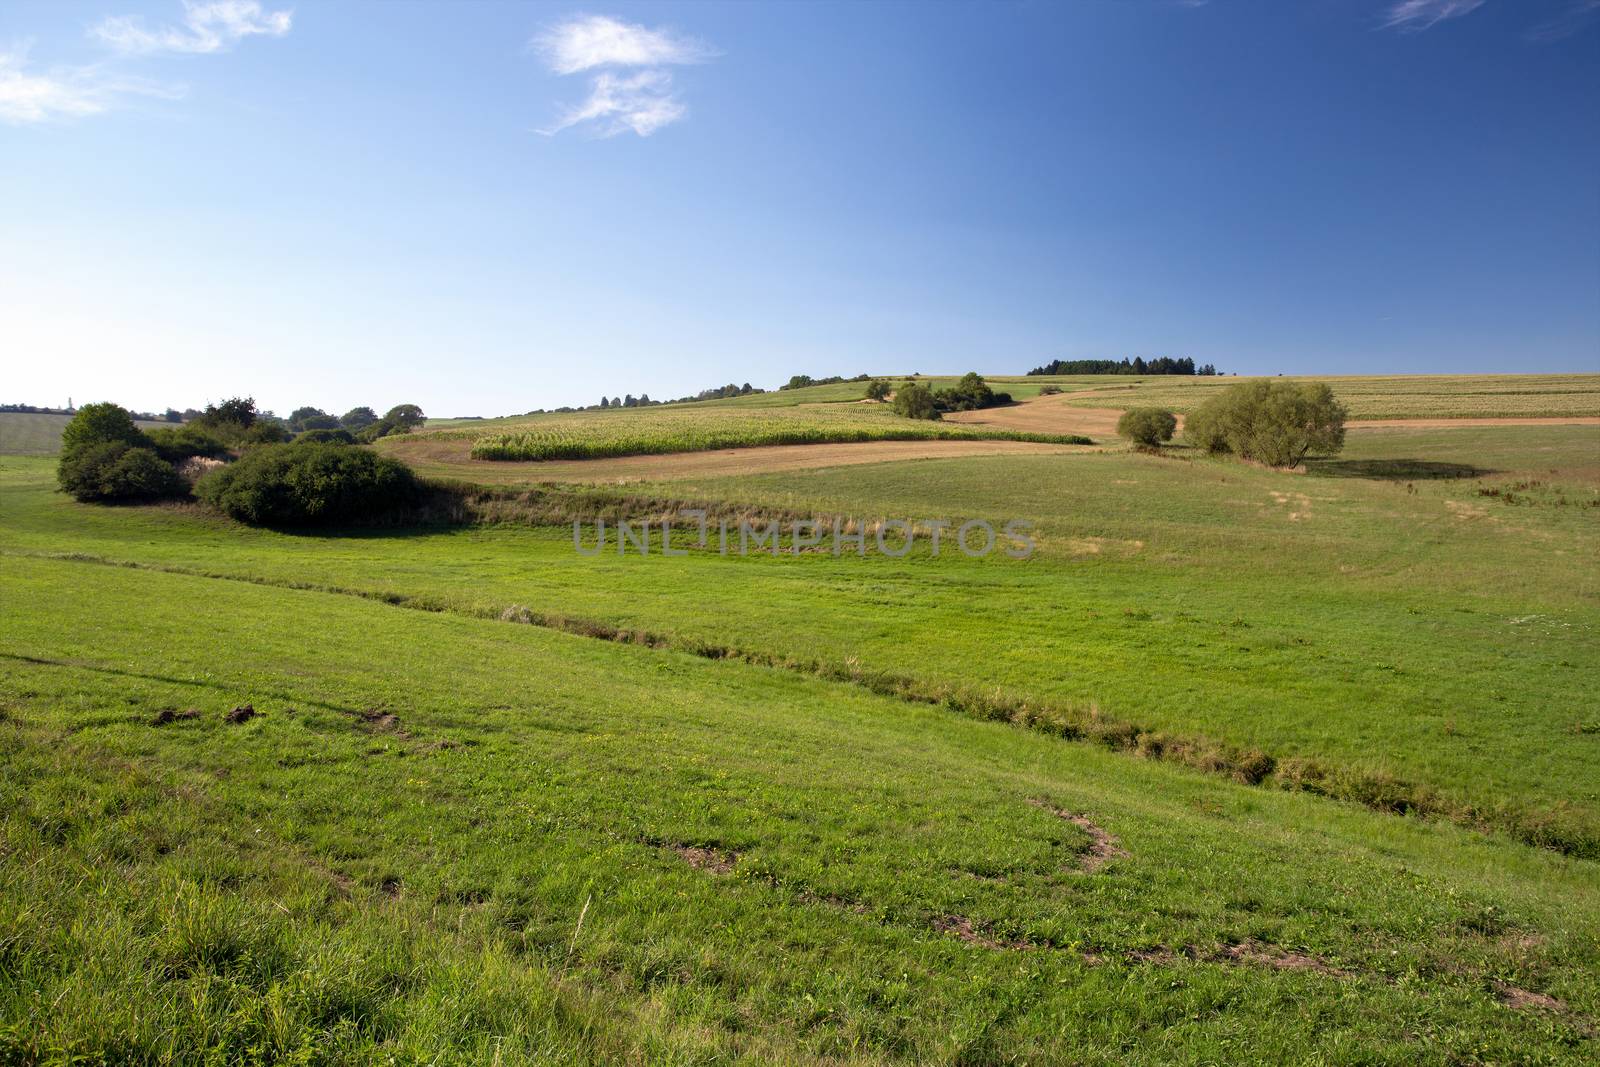 rural summer landscape in czech Republic - region Vysocina